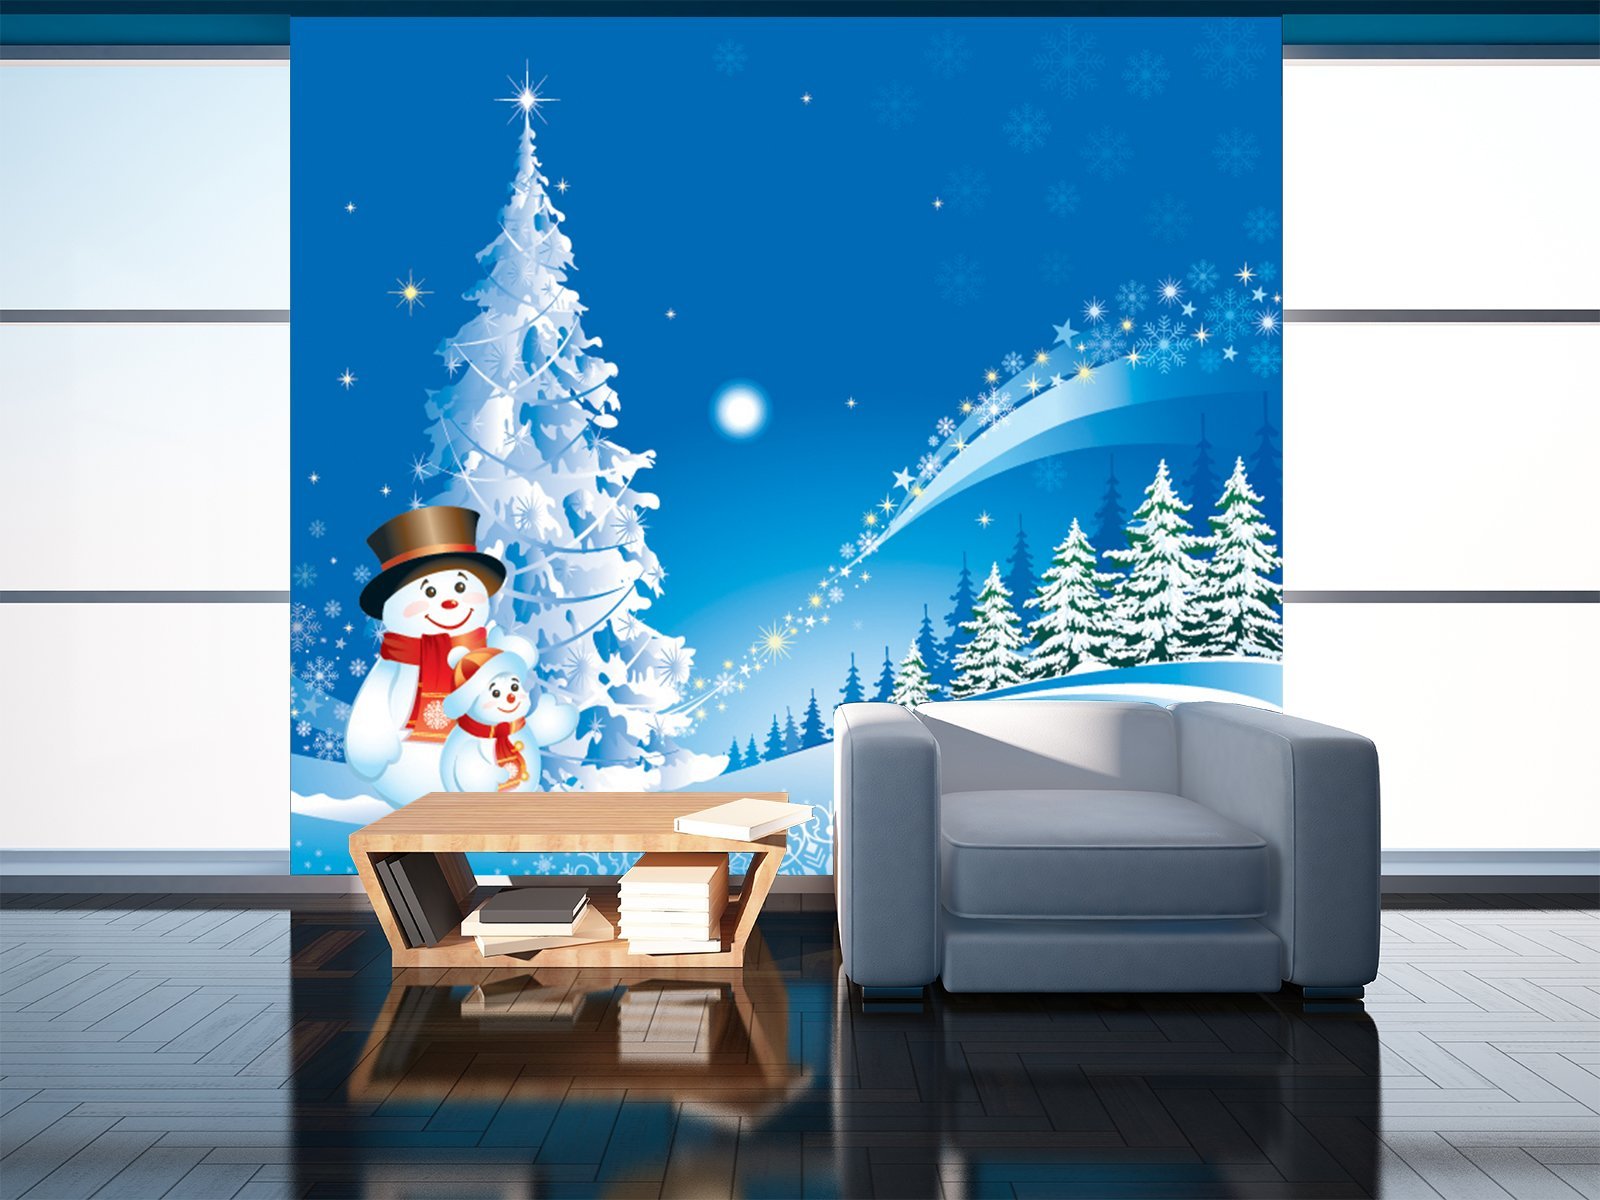 3D Shiny Star Snowman 095 Wallpaper AJ Wallpaper 